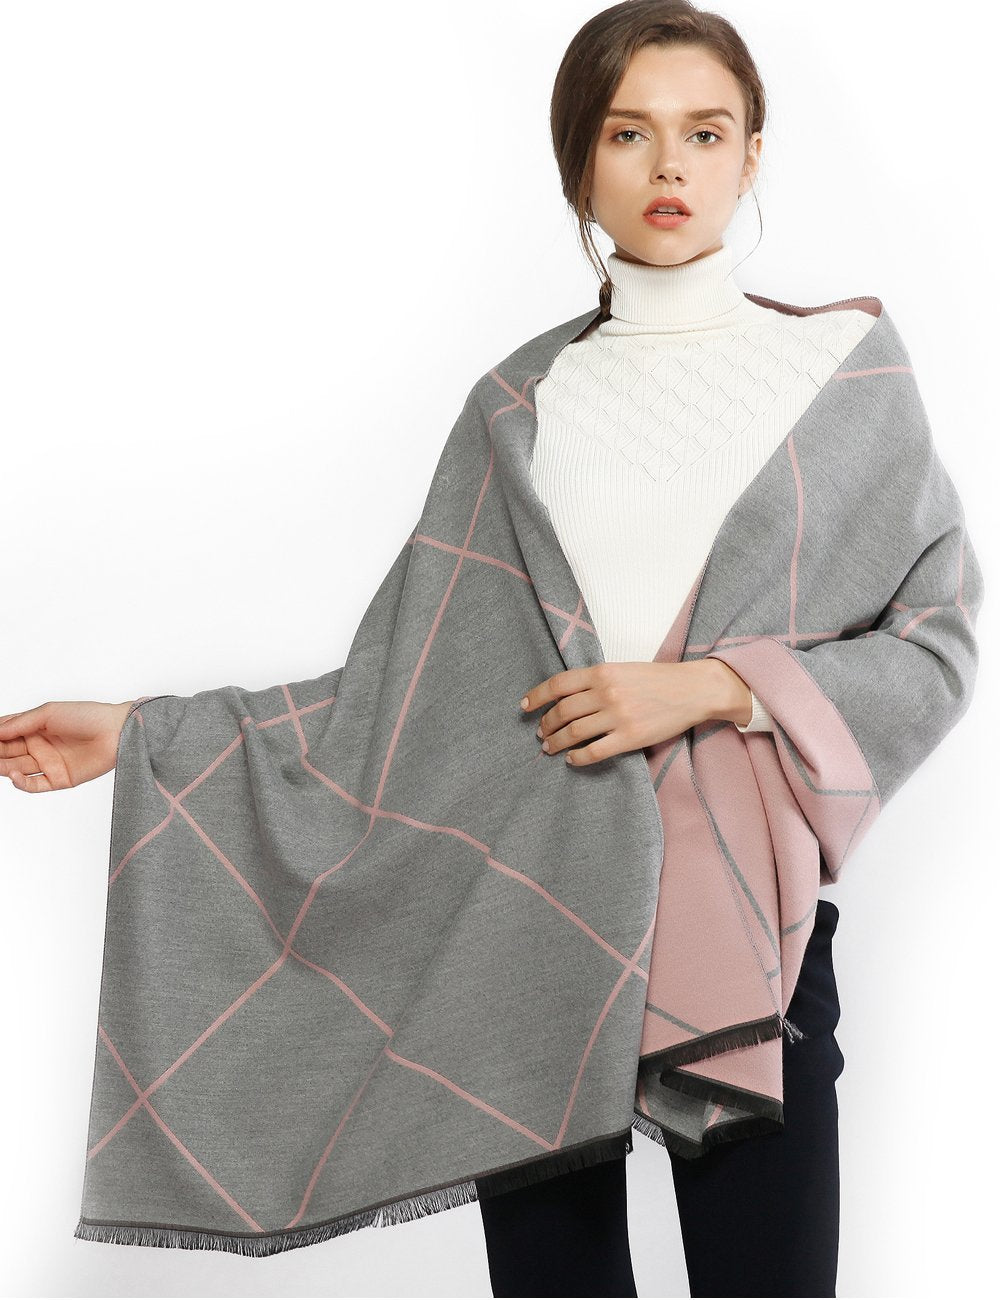 [Australia] - RIIQIICHY Women Winter Scarf Pashmina Shawl Wrap with Tassel Plaid Reversible Grey and Pink 